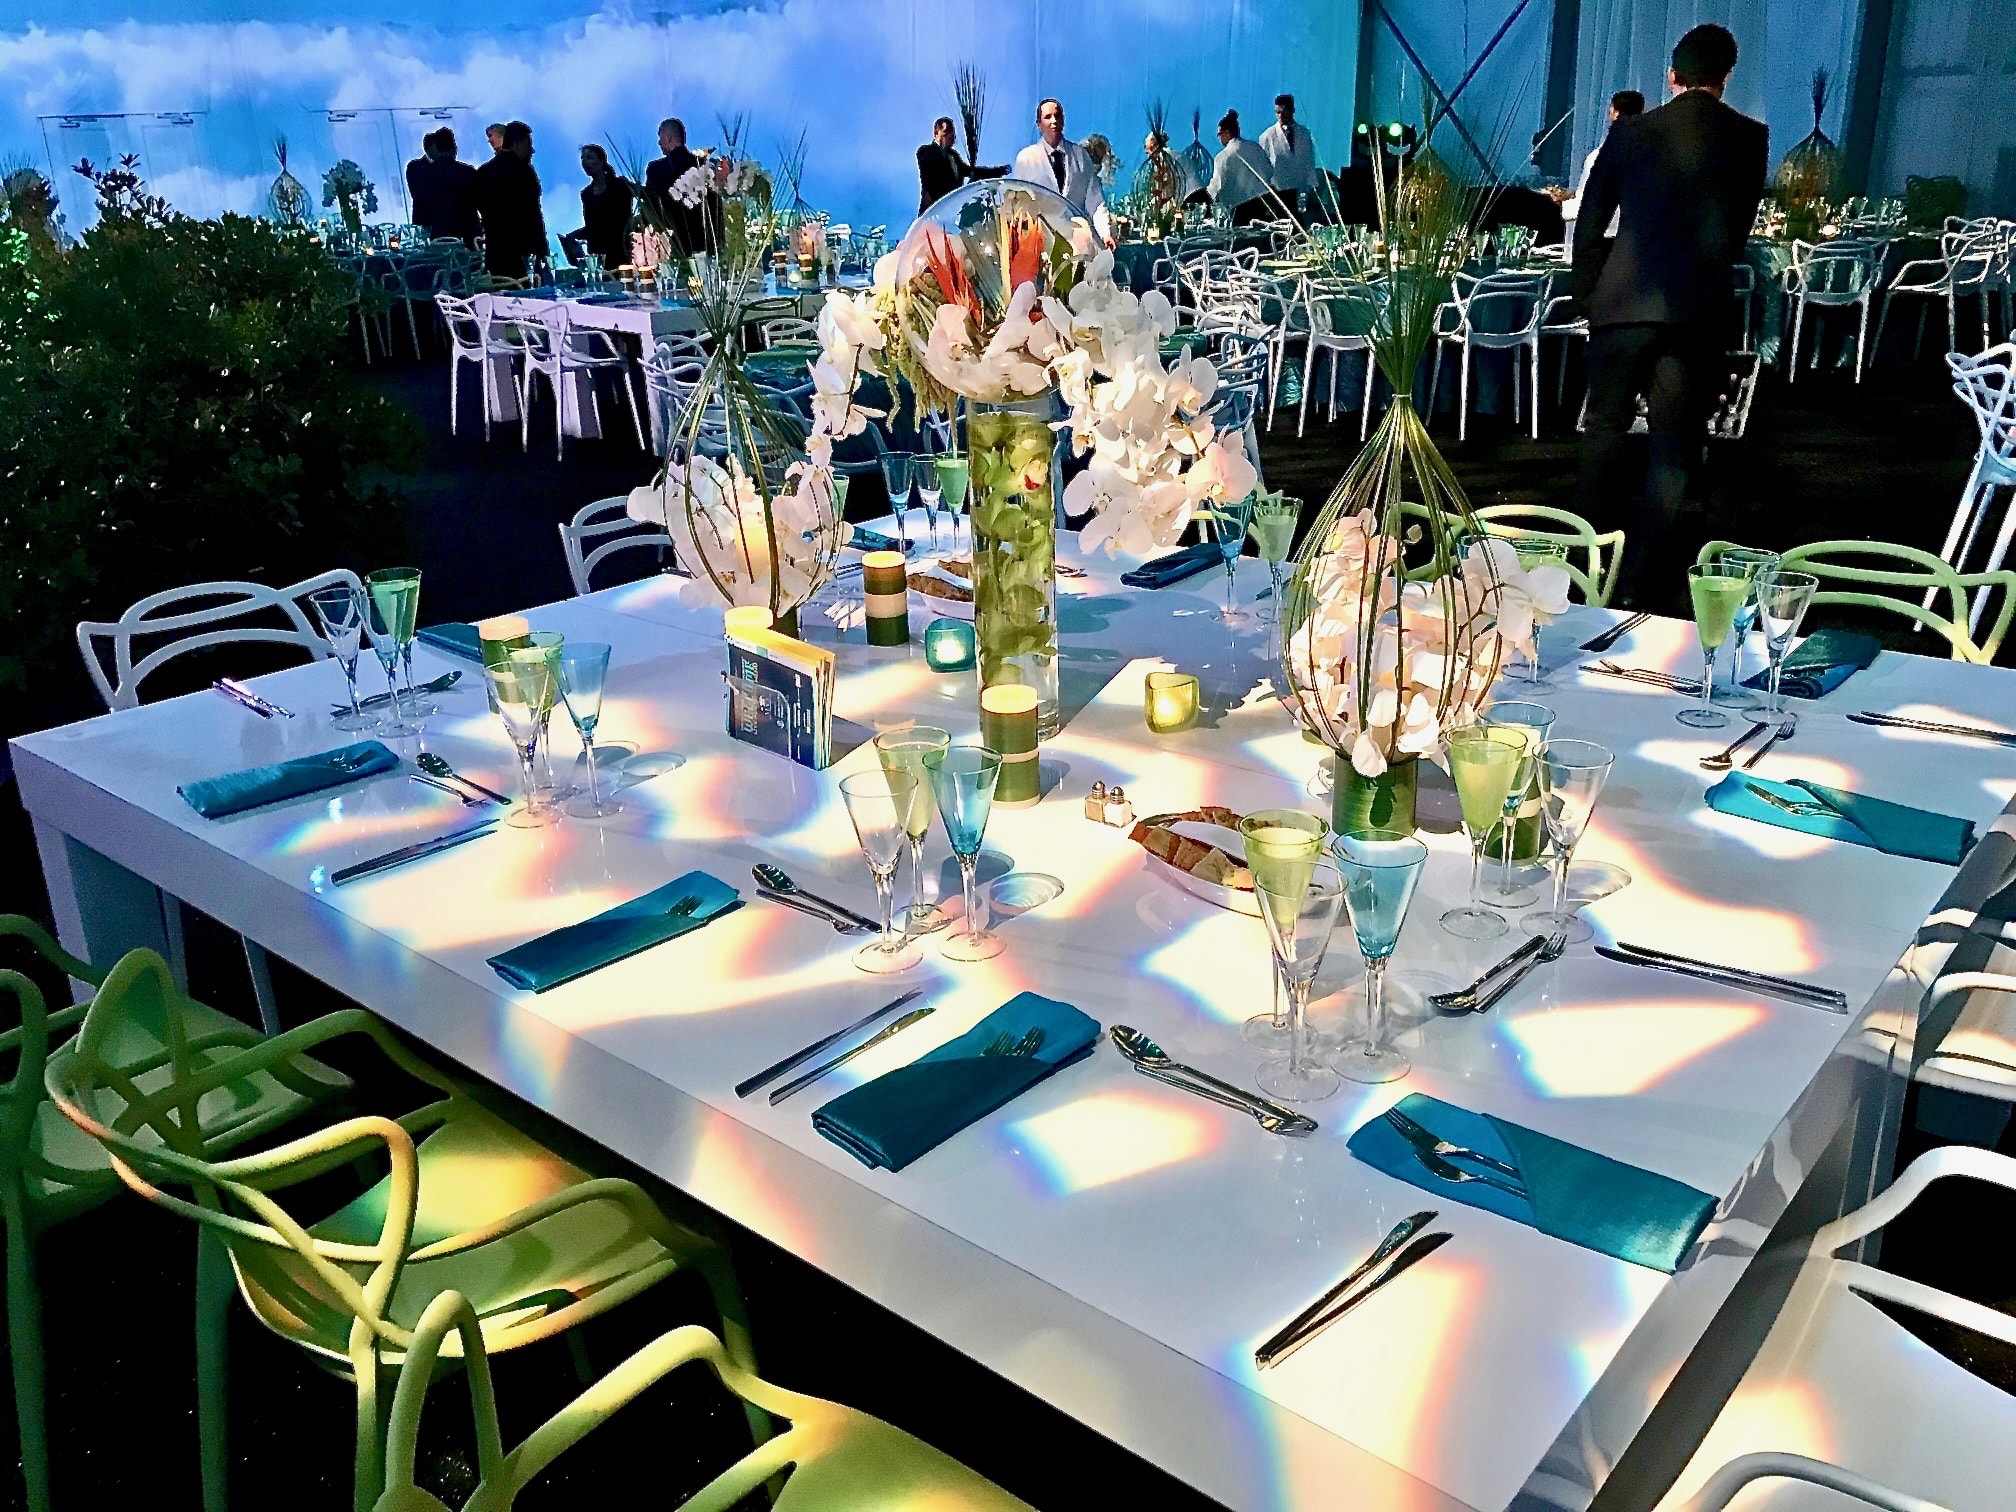 Table setup at a wedding